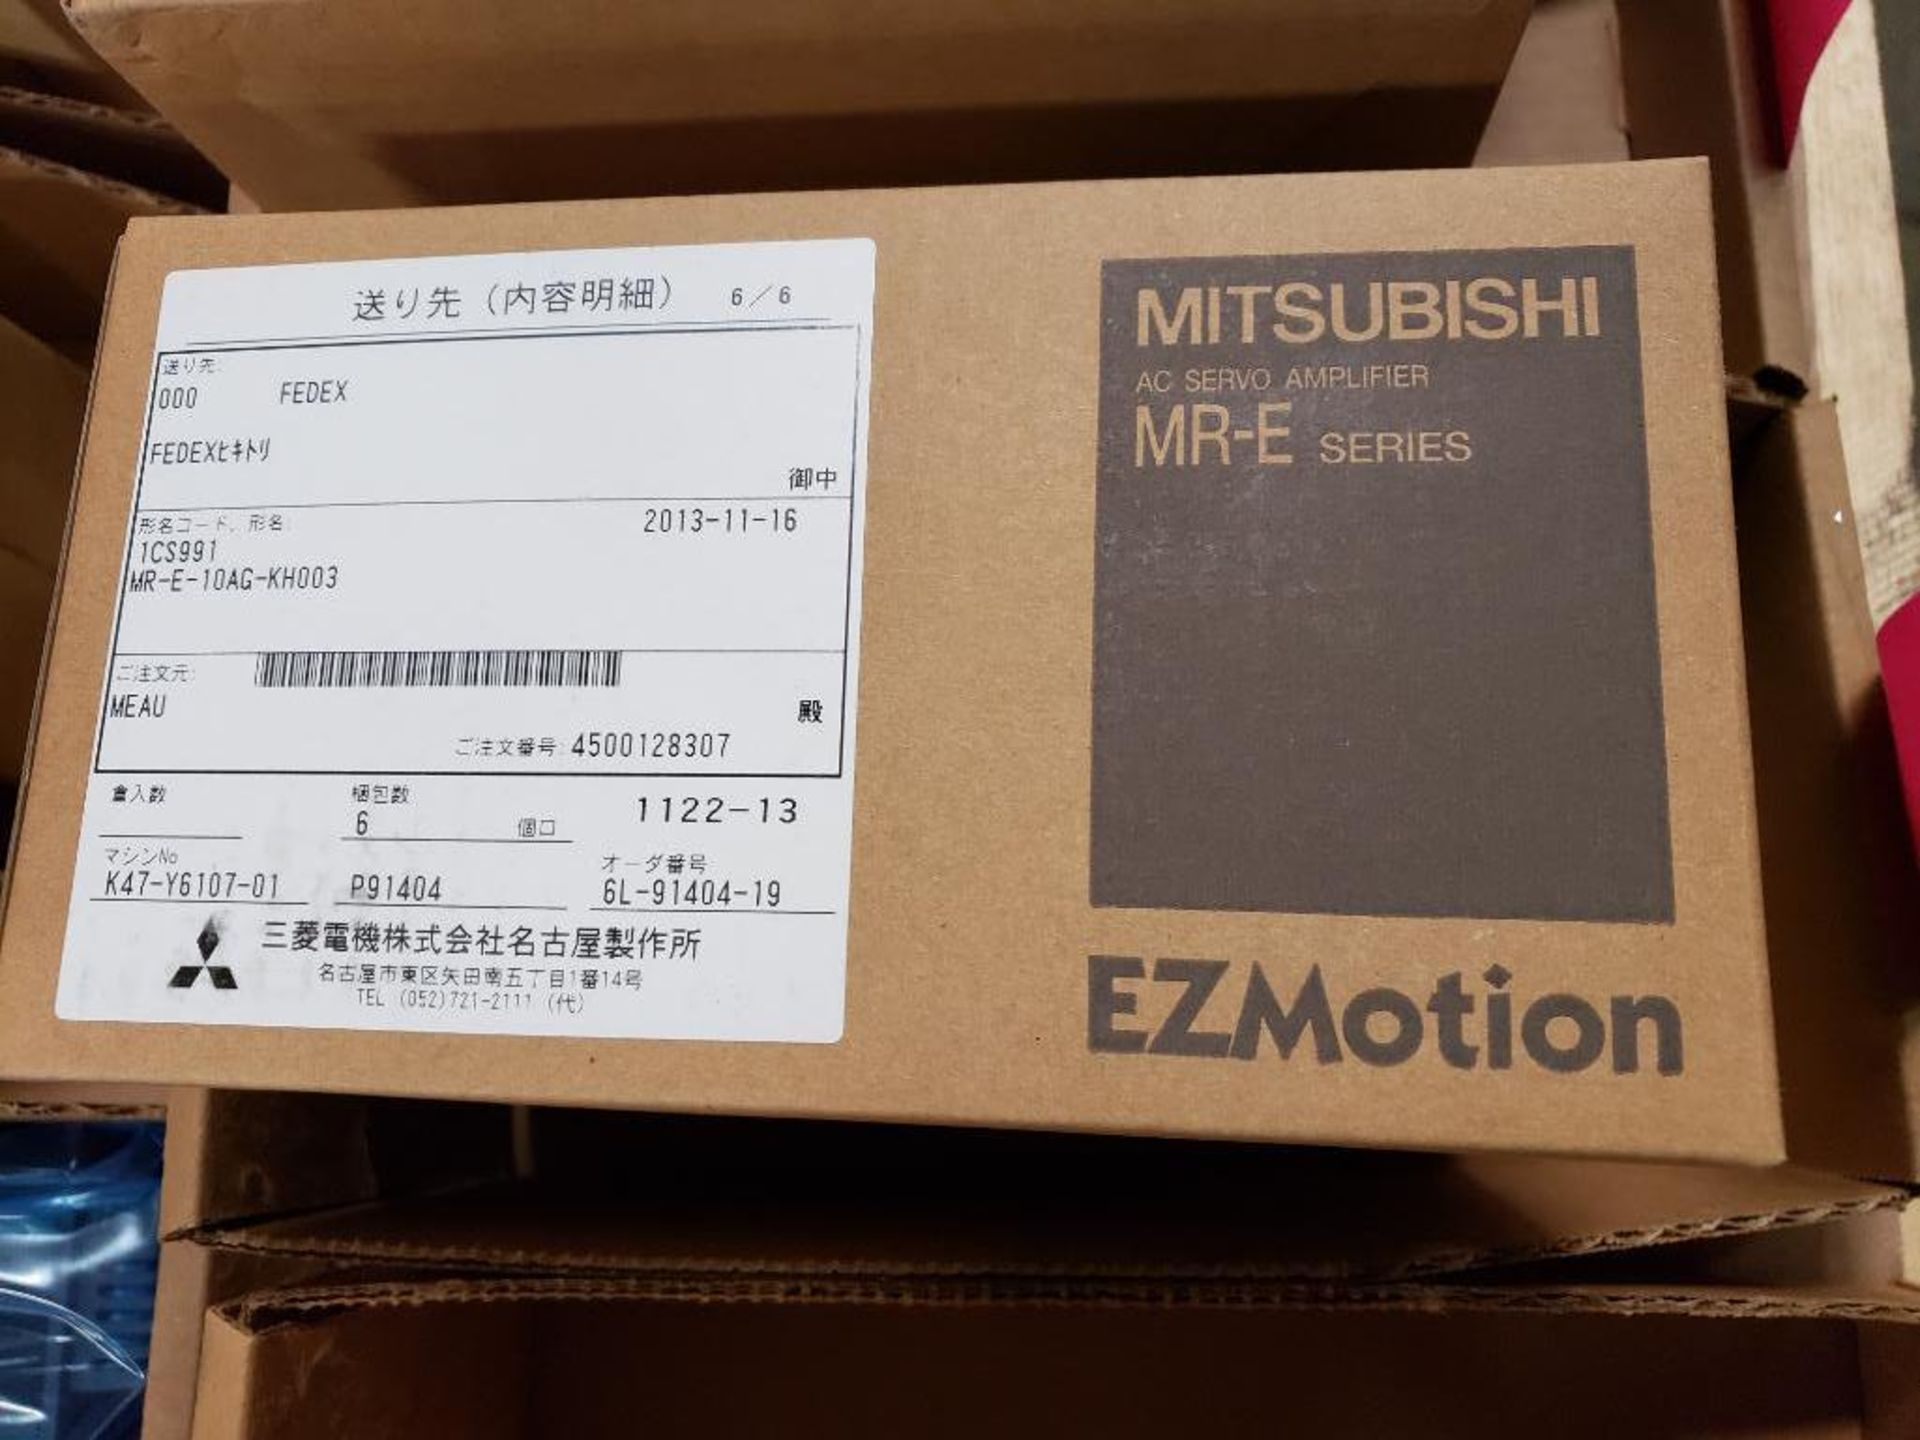 Mitsubishi MR-E-10AG-KH003 AC servo amplifier. New in box. - Image 2 of 4